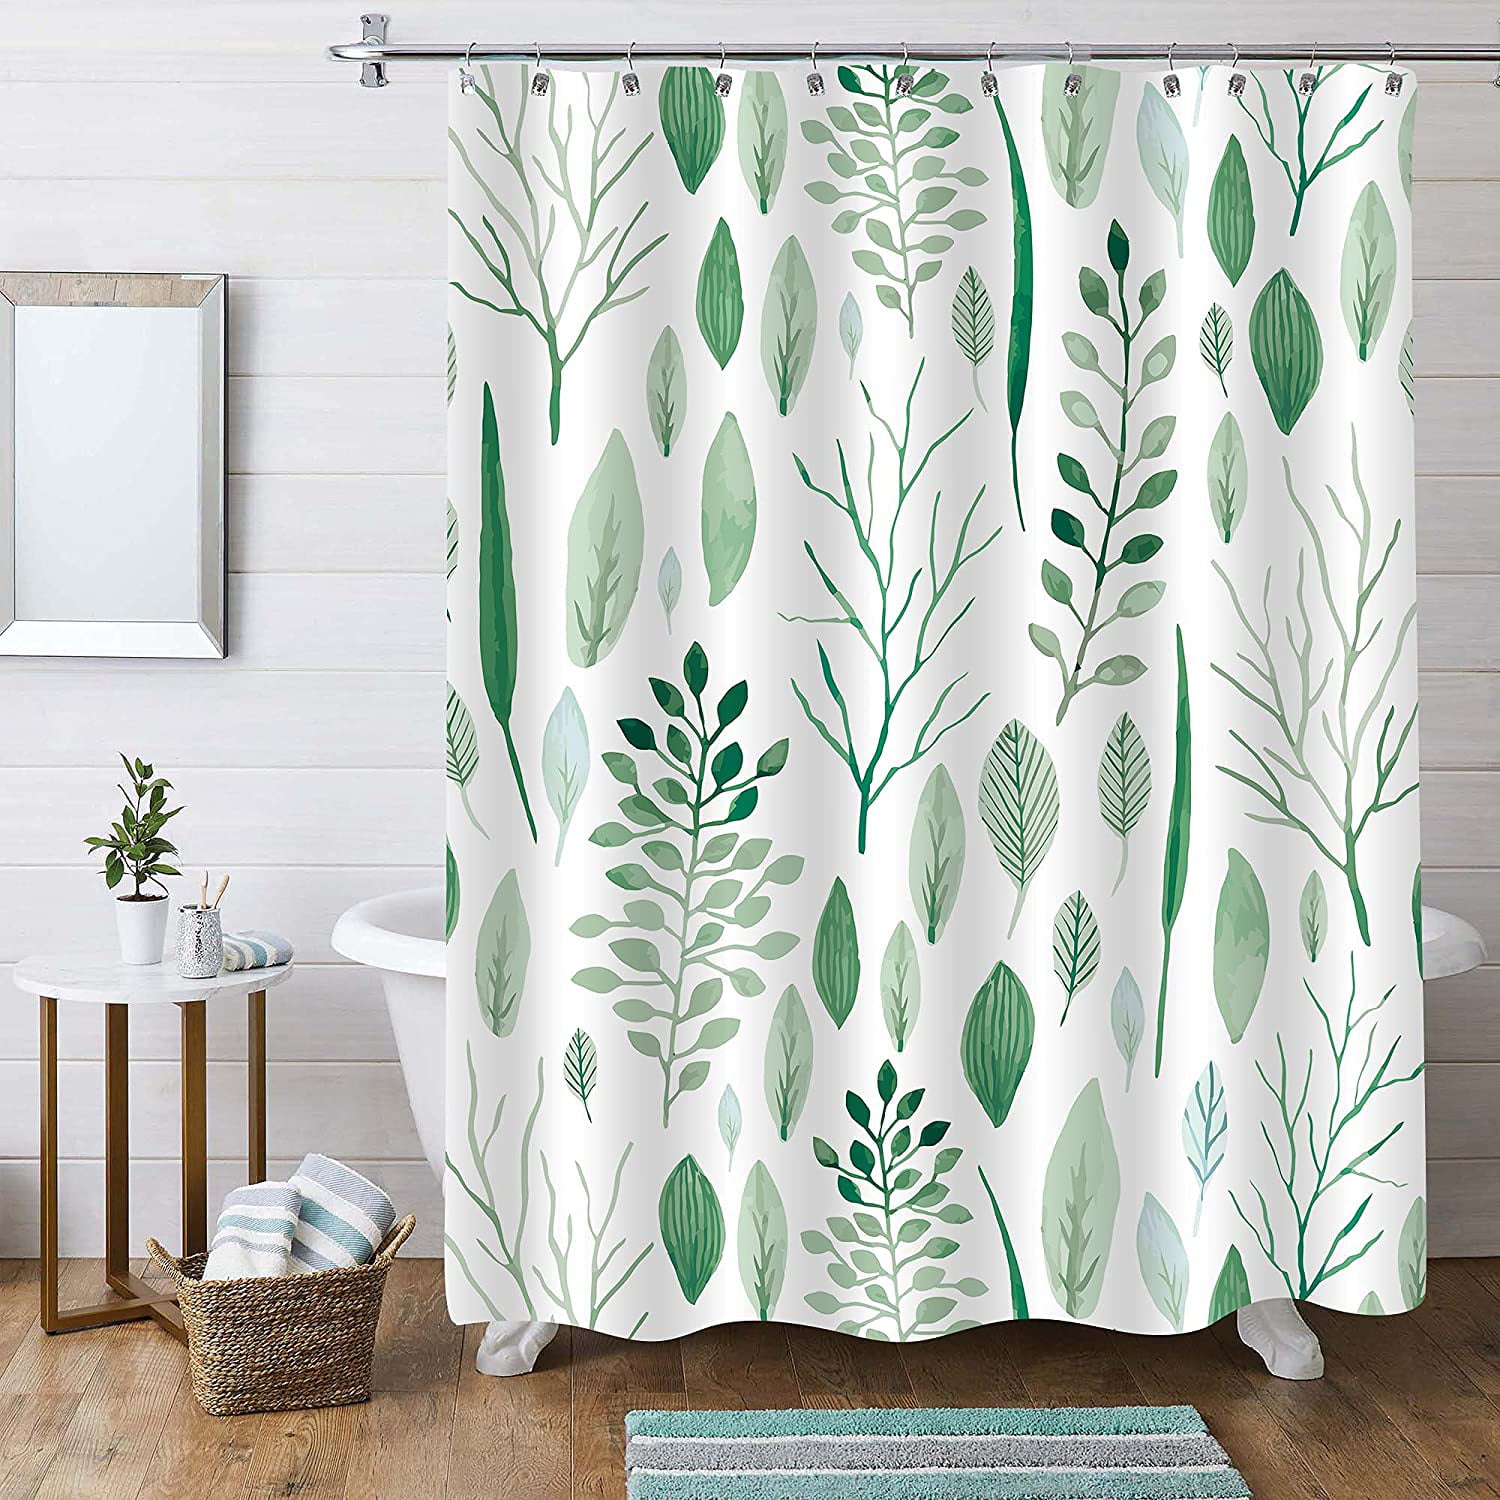 Waterproof Fabric Green Fern Leaves Shower Curtain Liner Bathroom Set Hooks 